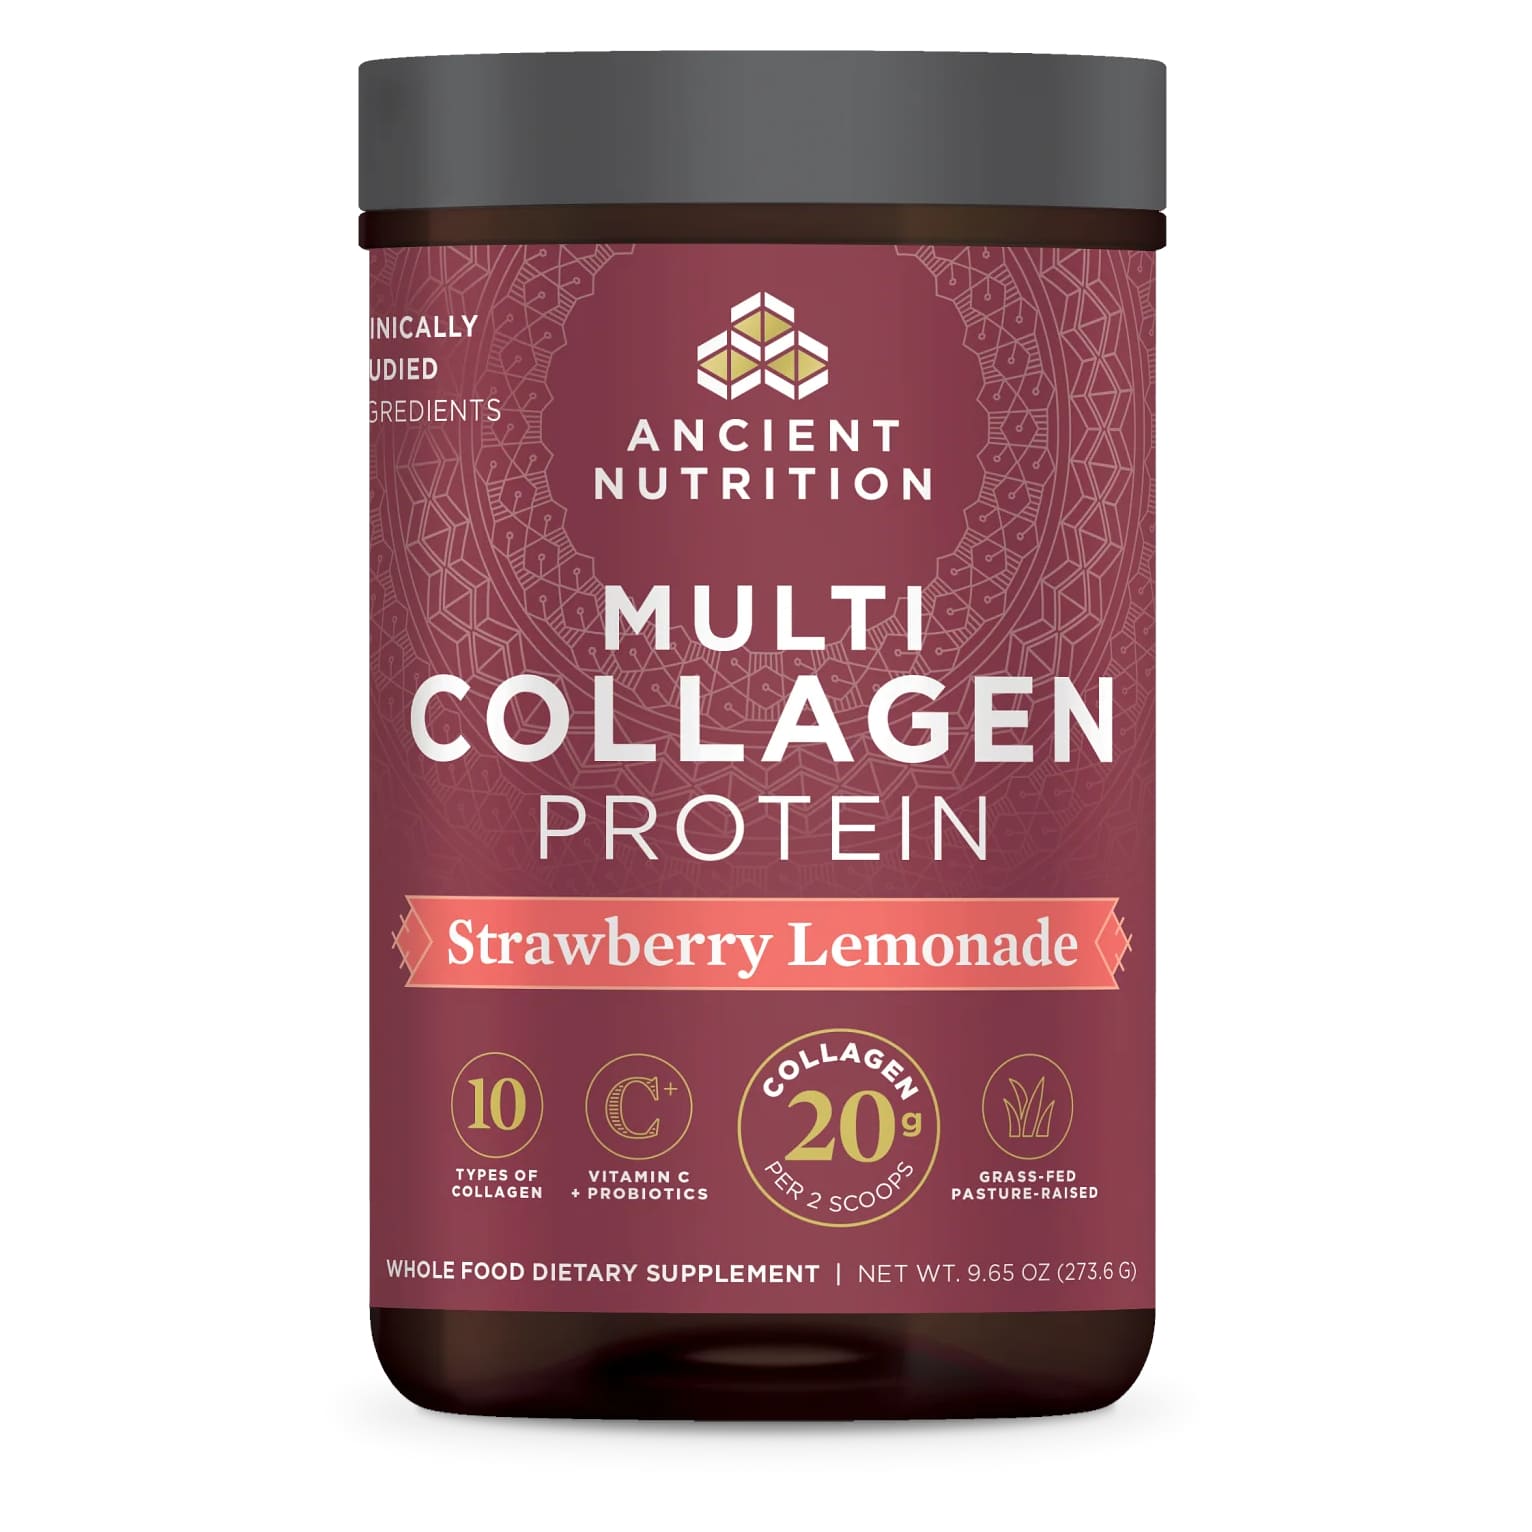 цена Коллаген Ancient Nutrition Multi Protein 10 Types Vitamin C + Probiotics Strawberry Lemonade, 273,6 г